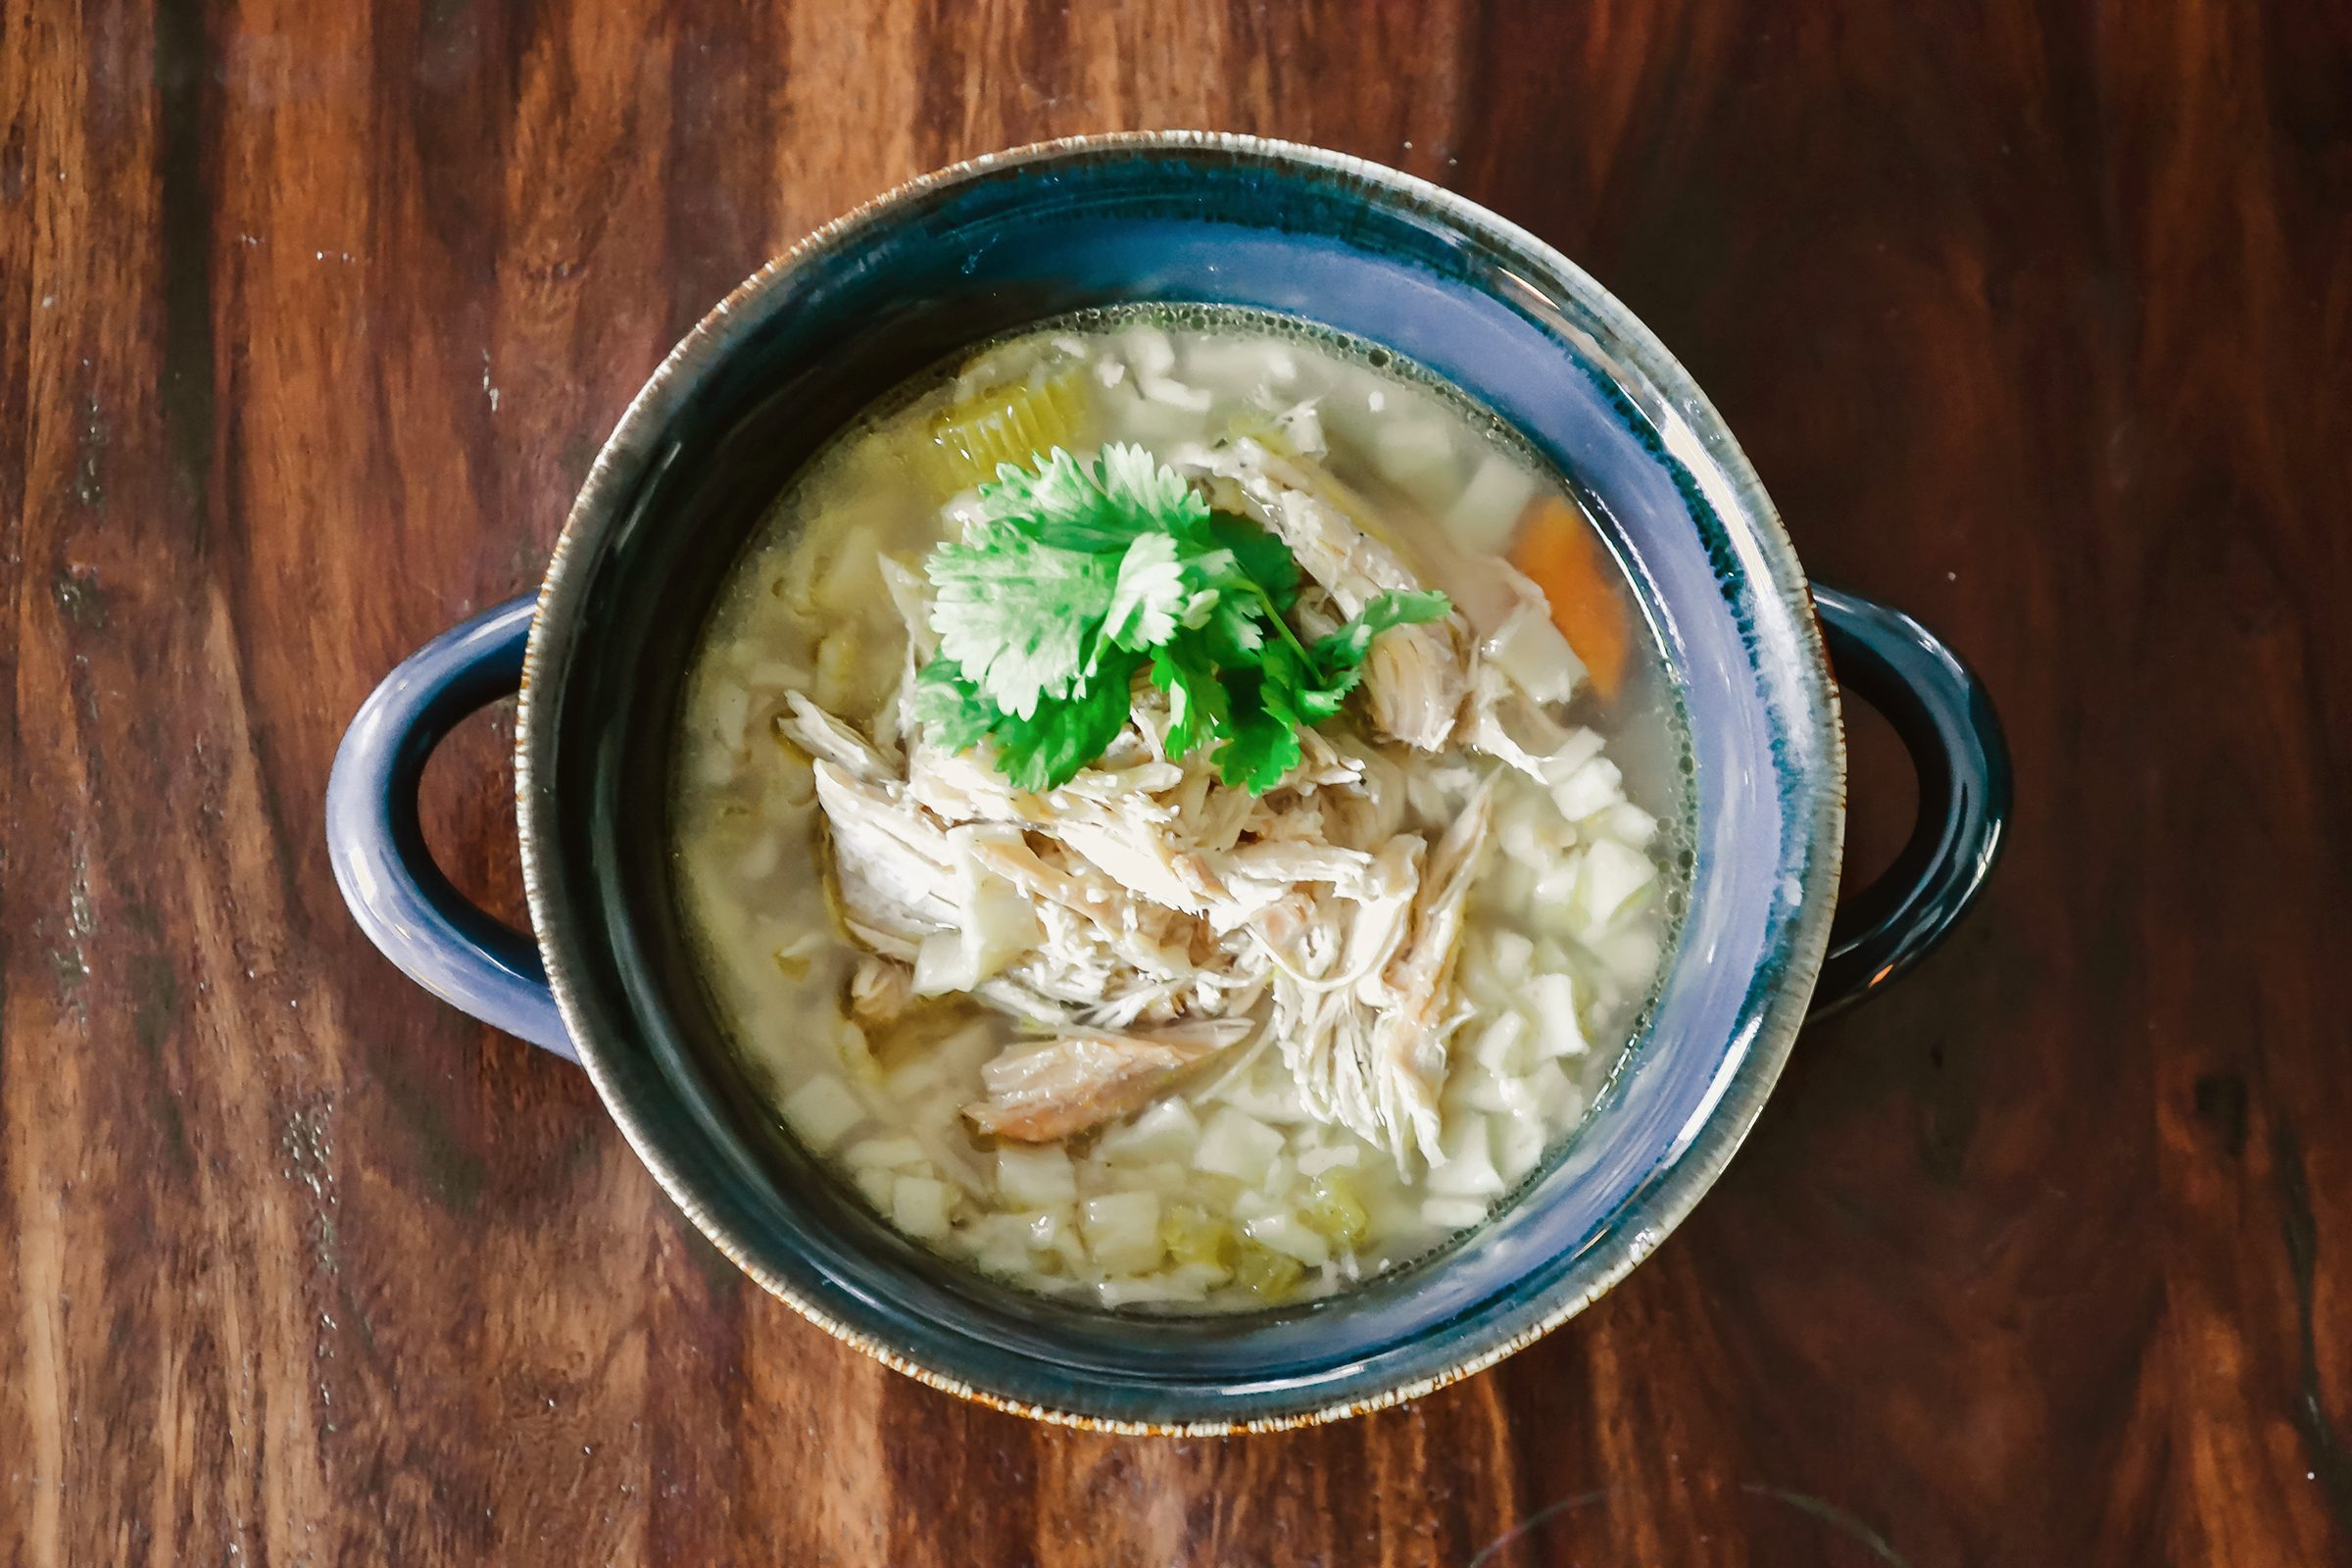 https://www.tasteofhome.com/wp-content/uploads/2020/02/DSC2295-chicken-noodle-soup-edit.jpg